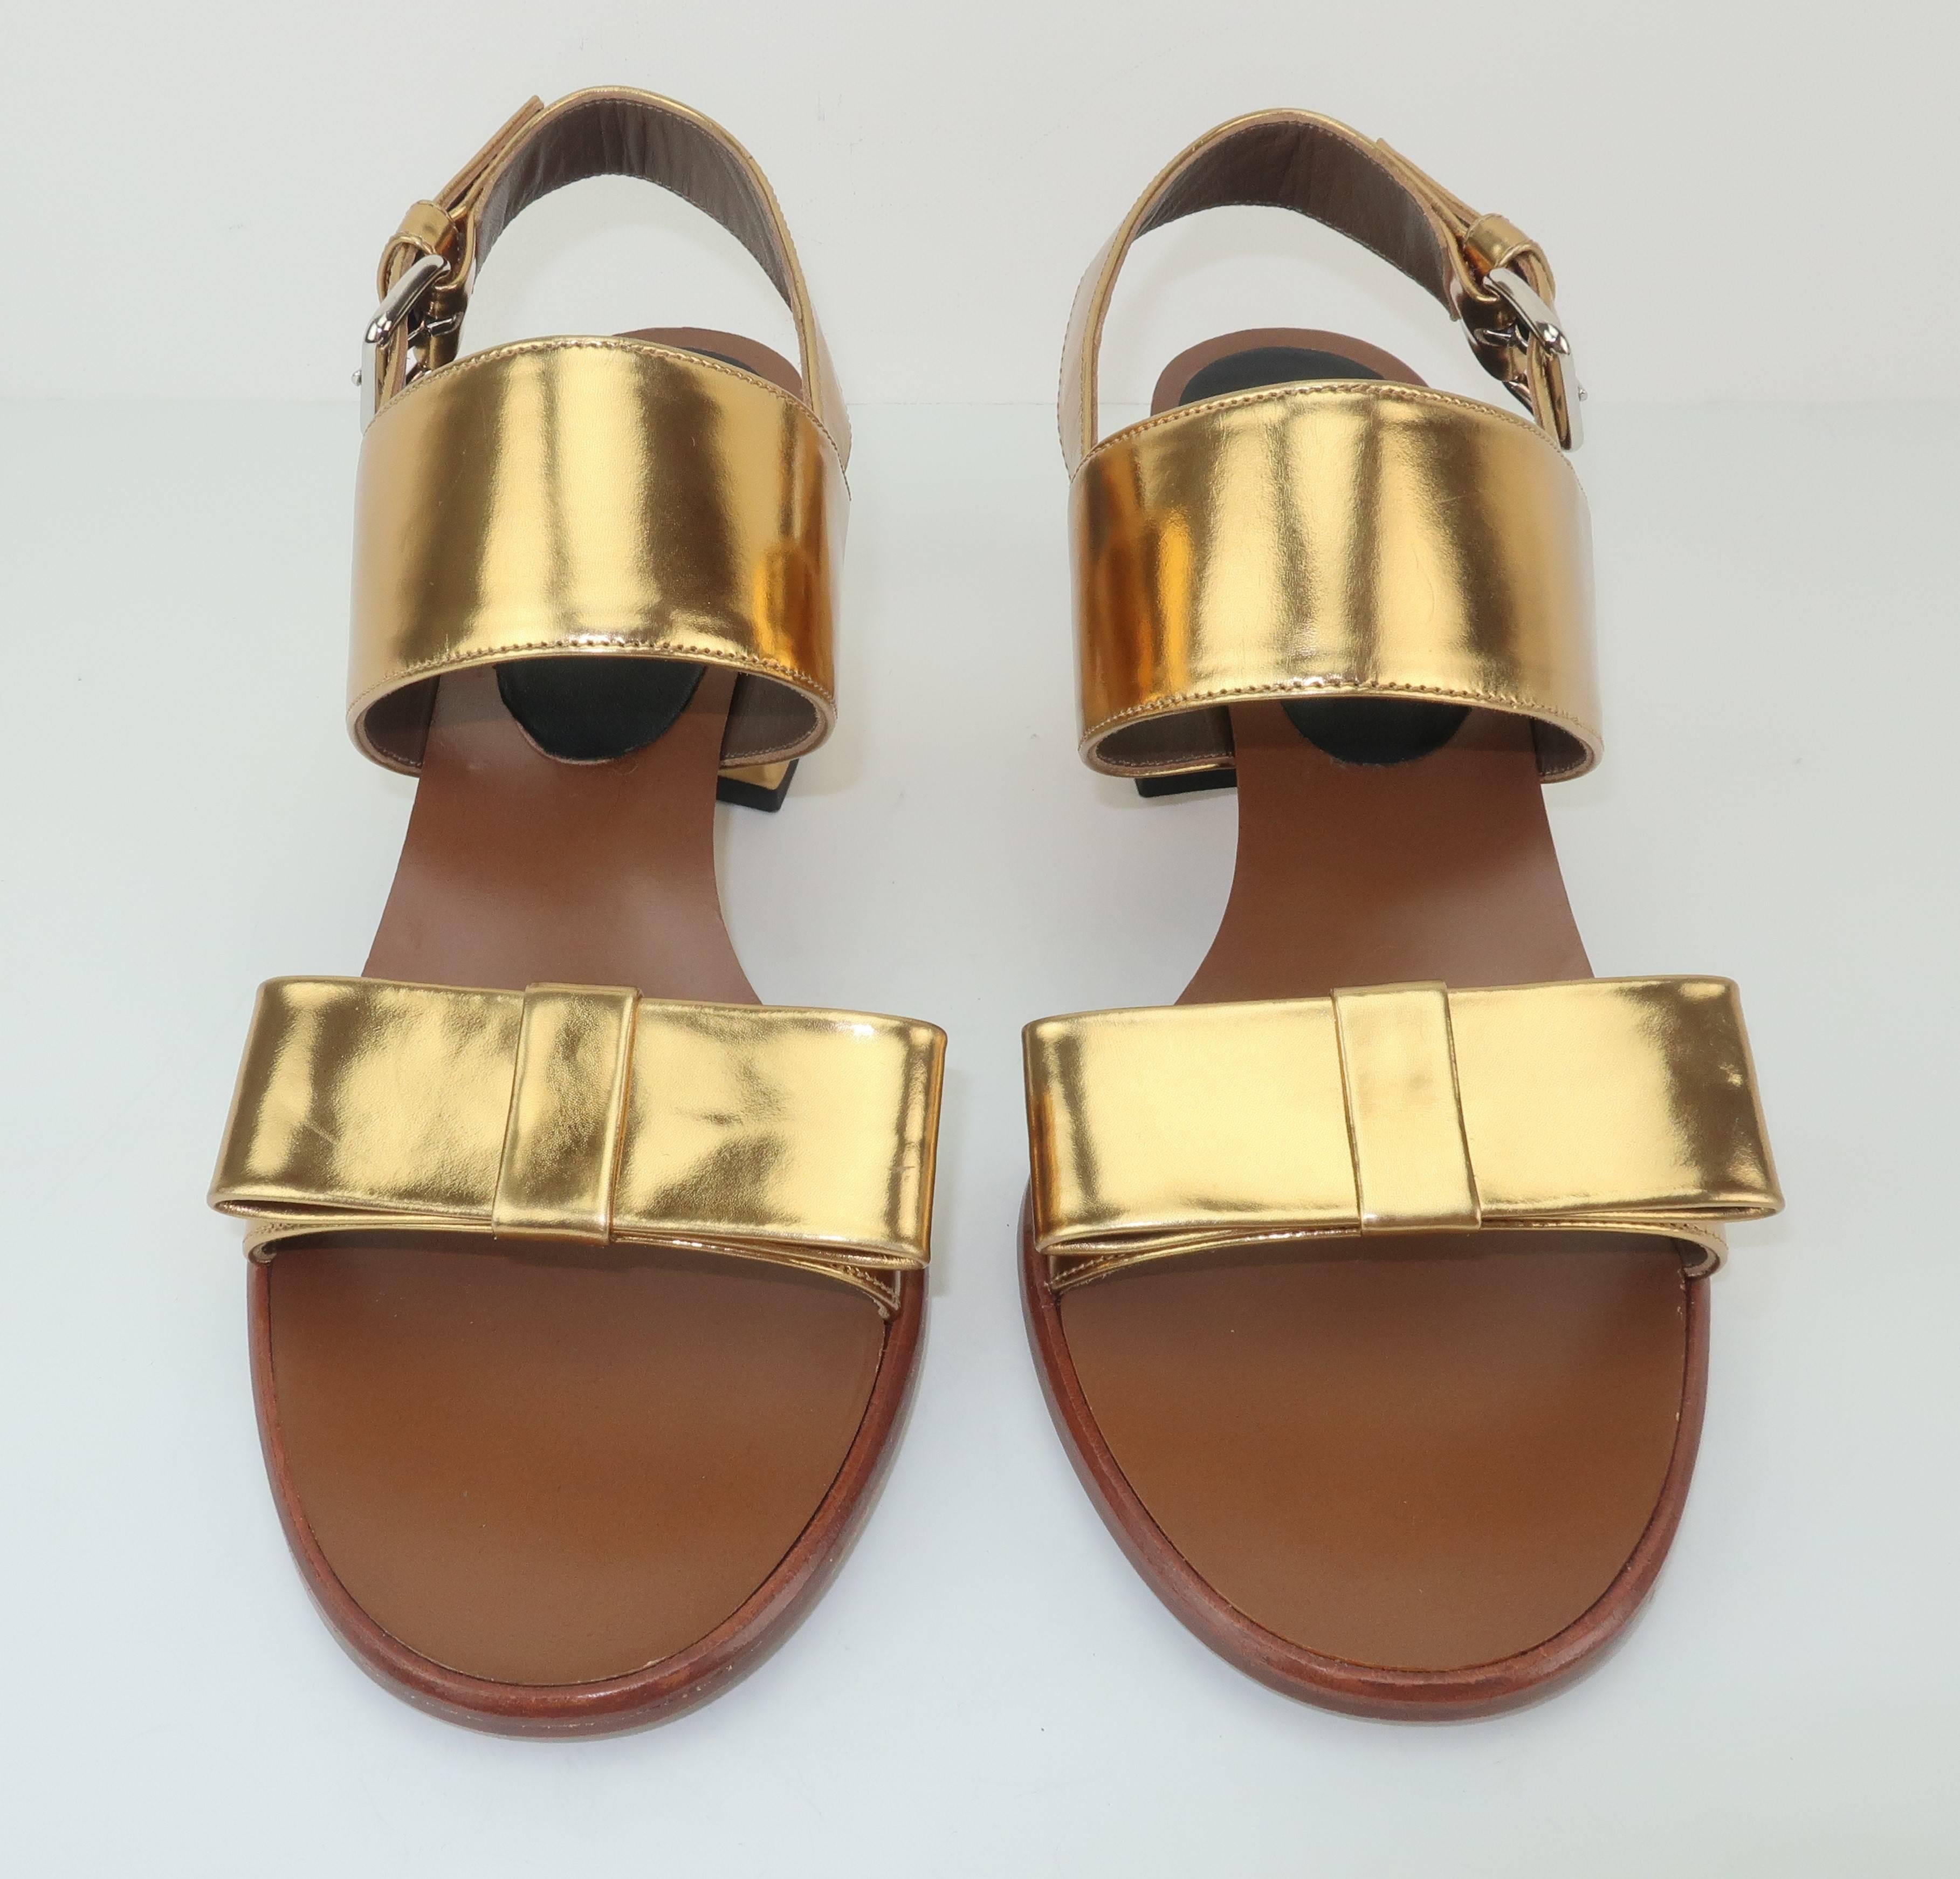 marni gold sandals